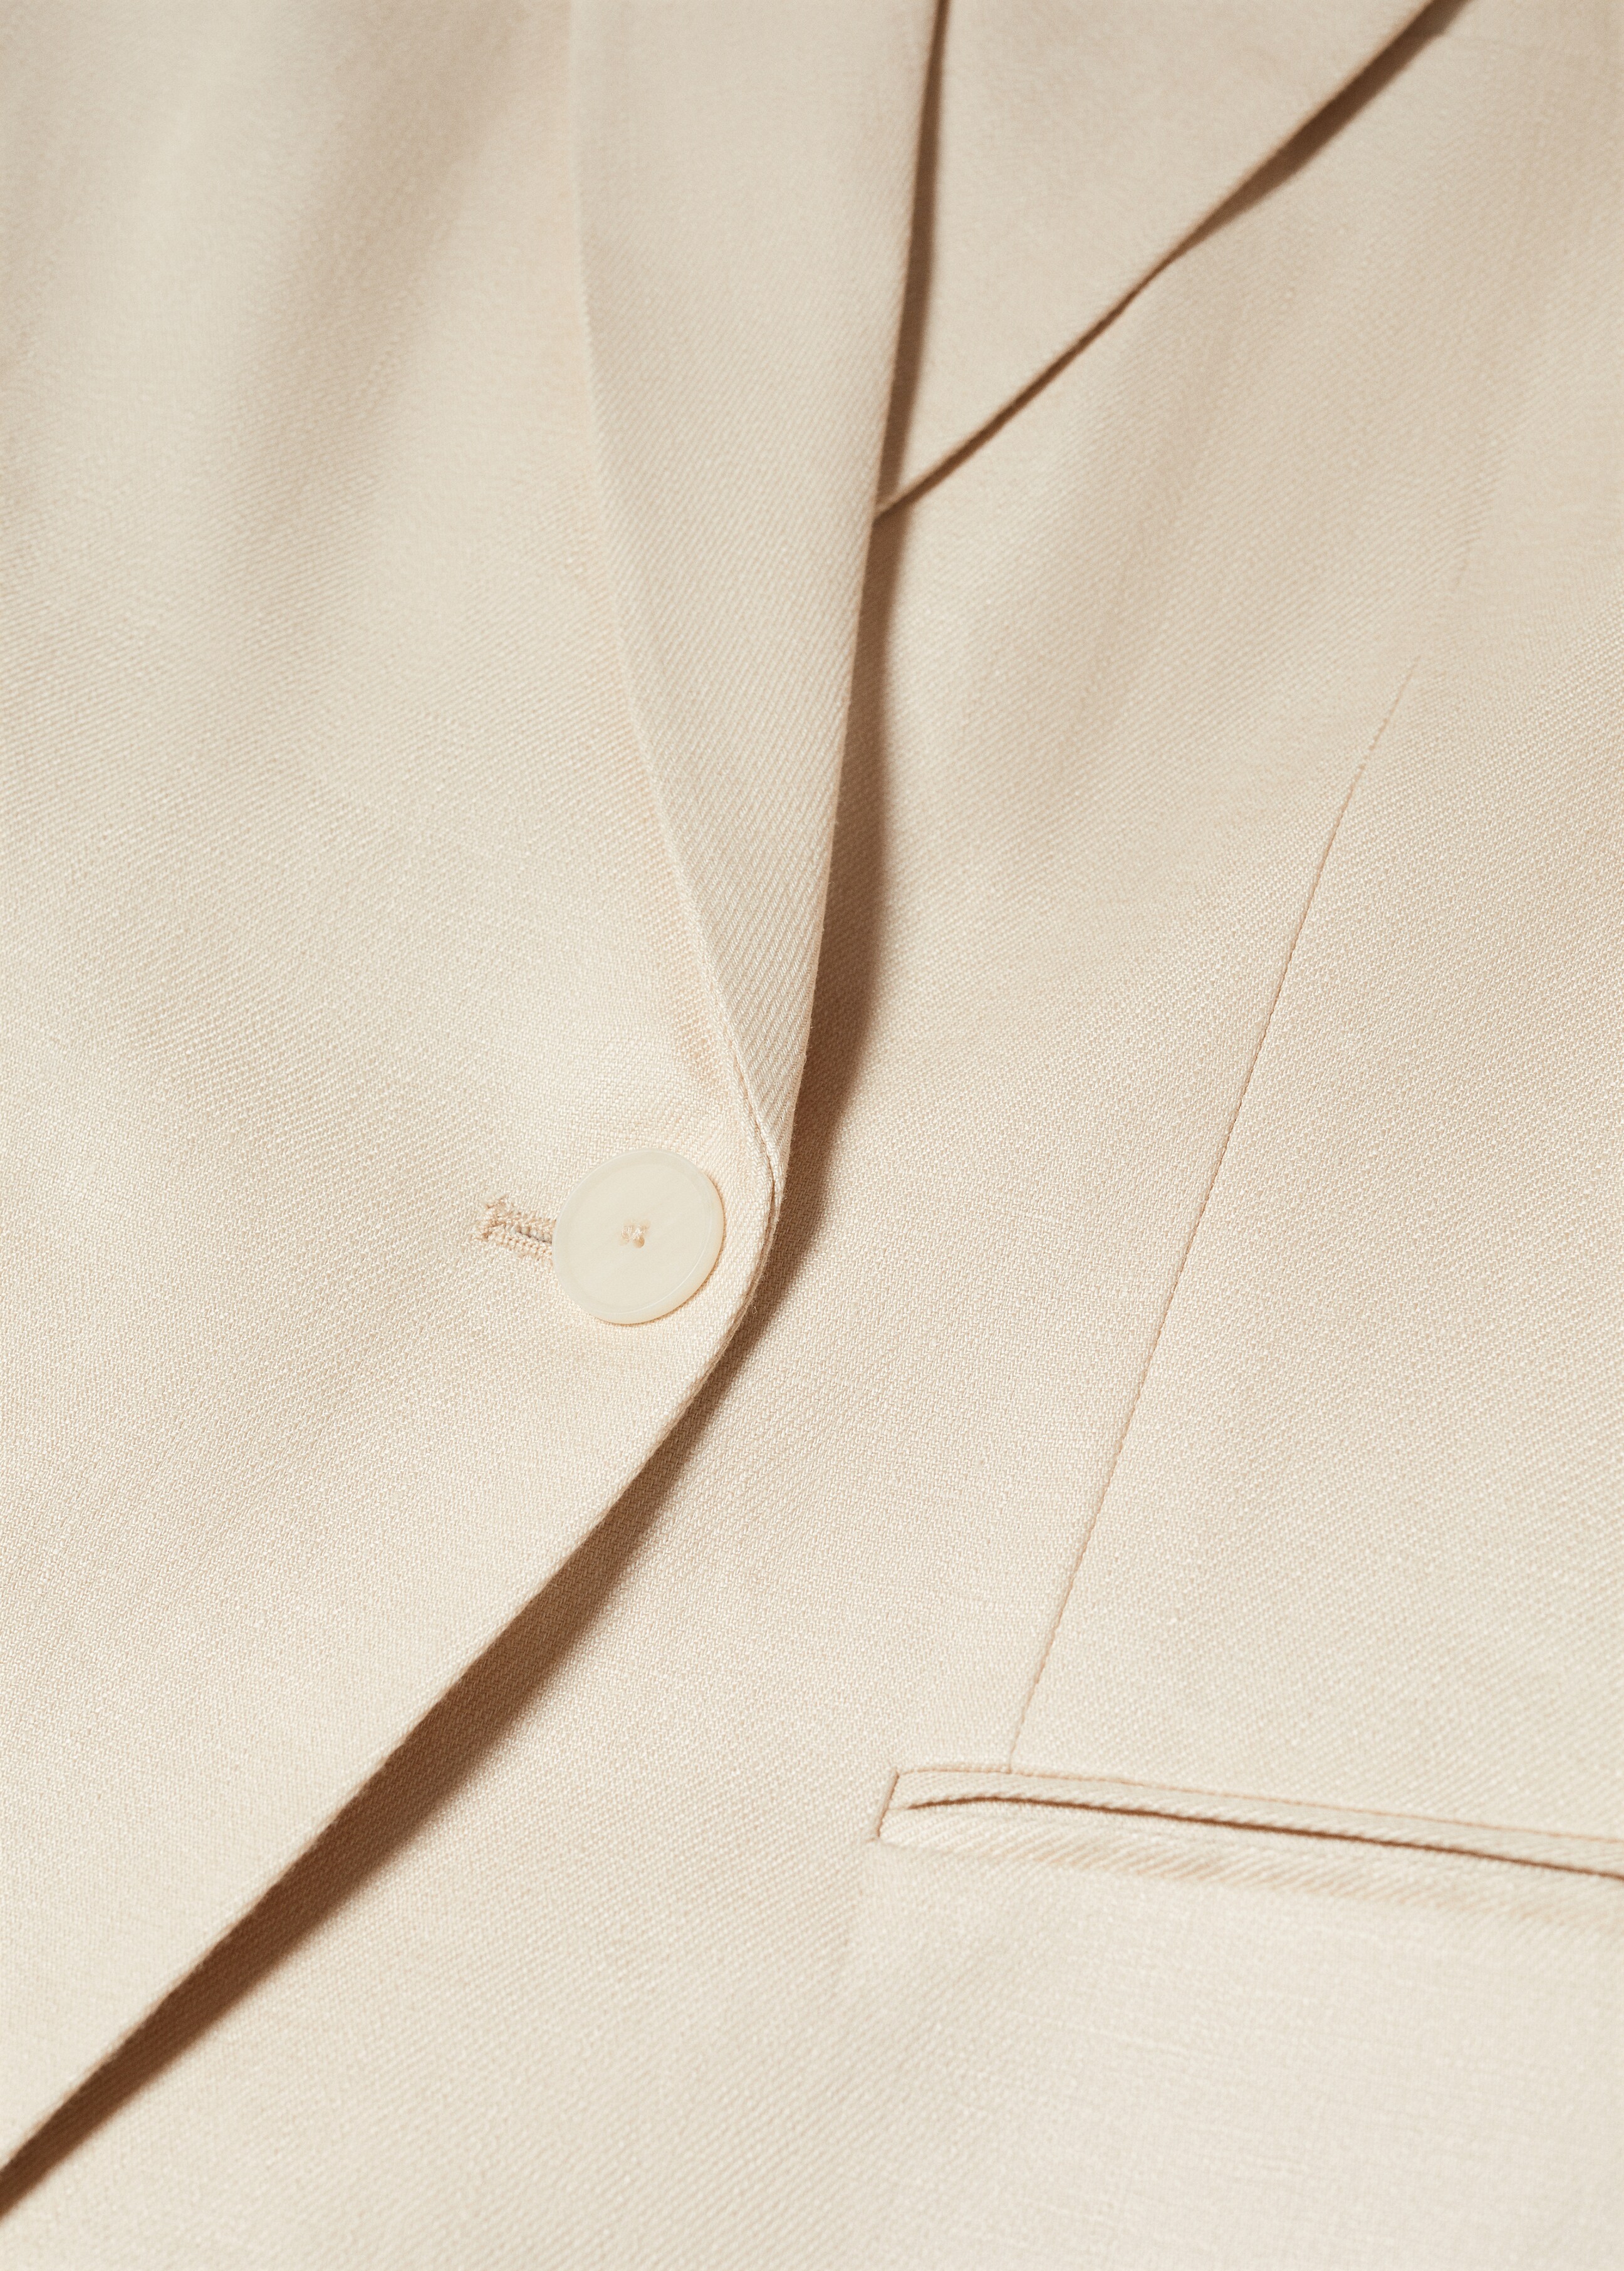 Linen button blazer - Details of the article 8